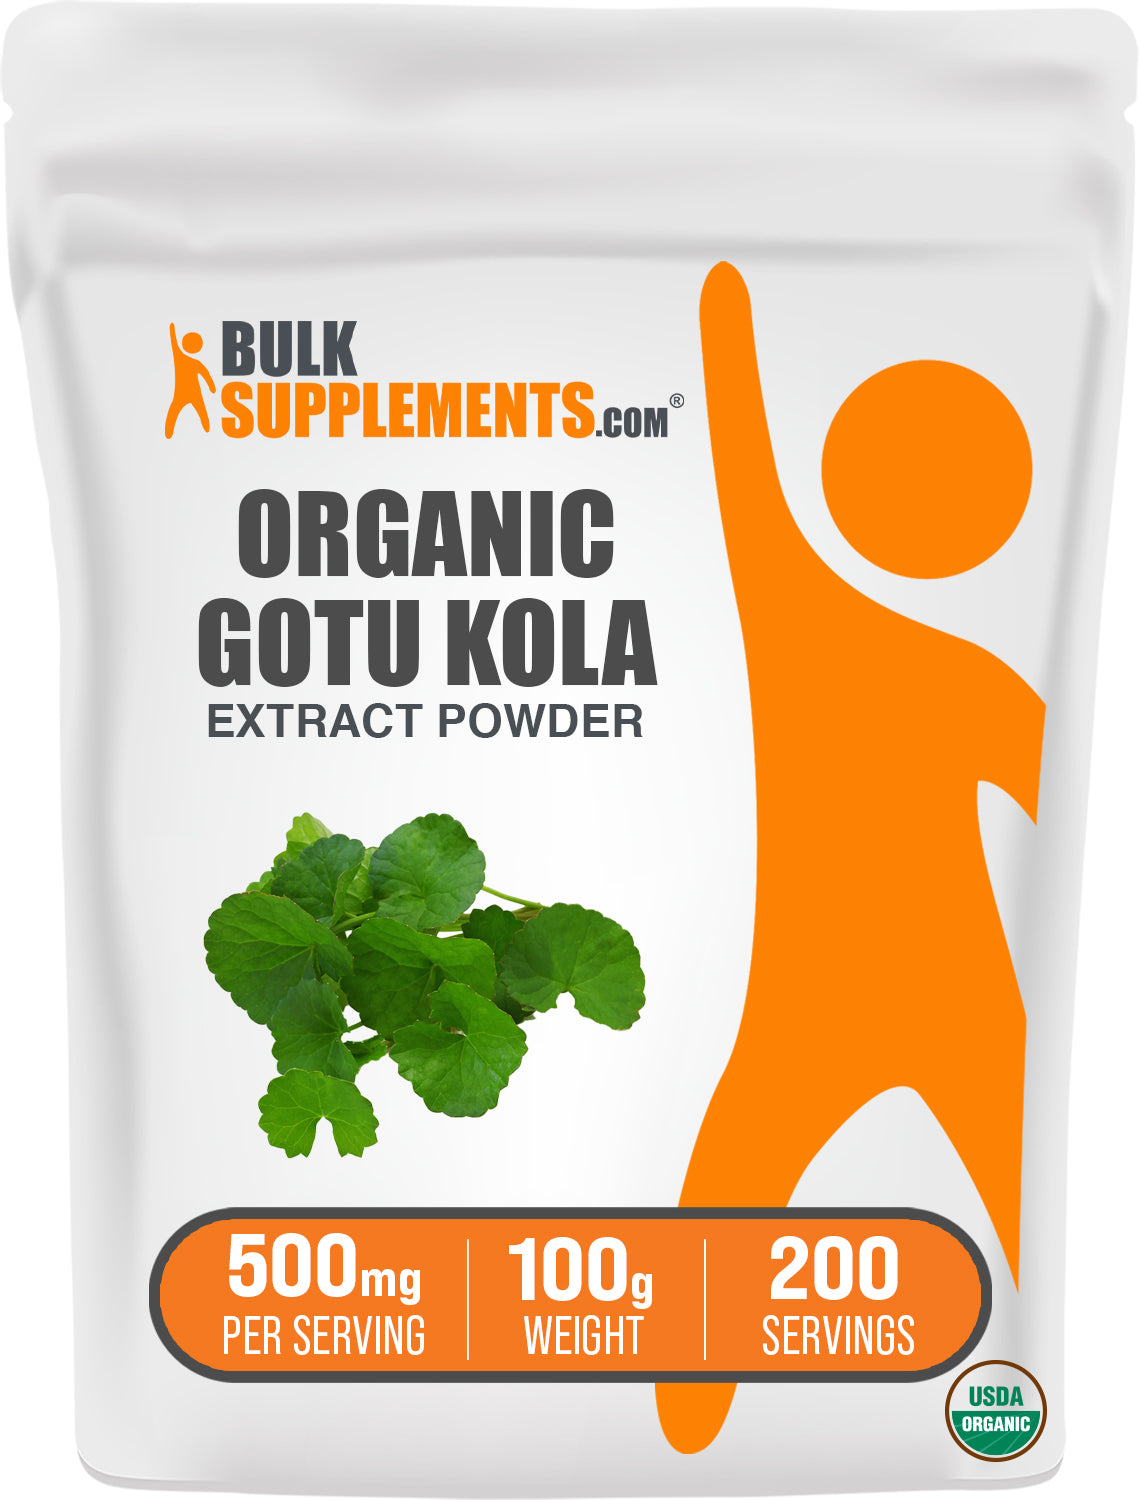 BulkSupplements.com organic gotu kola extract powder 100g bag